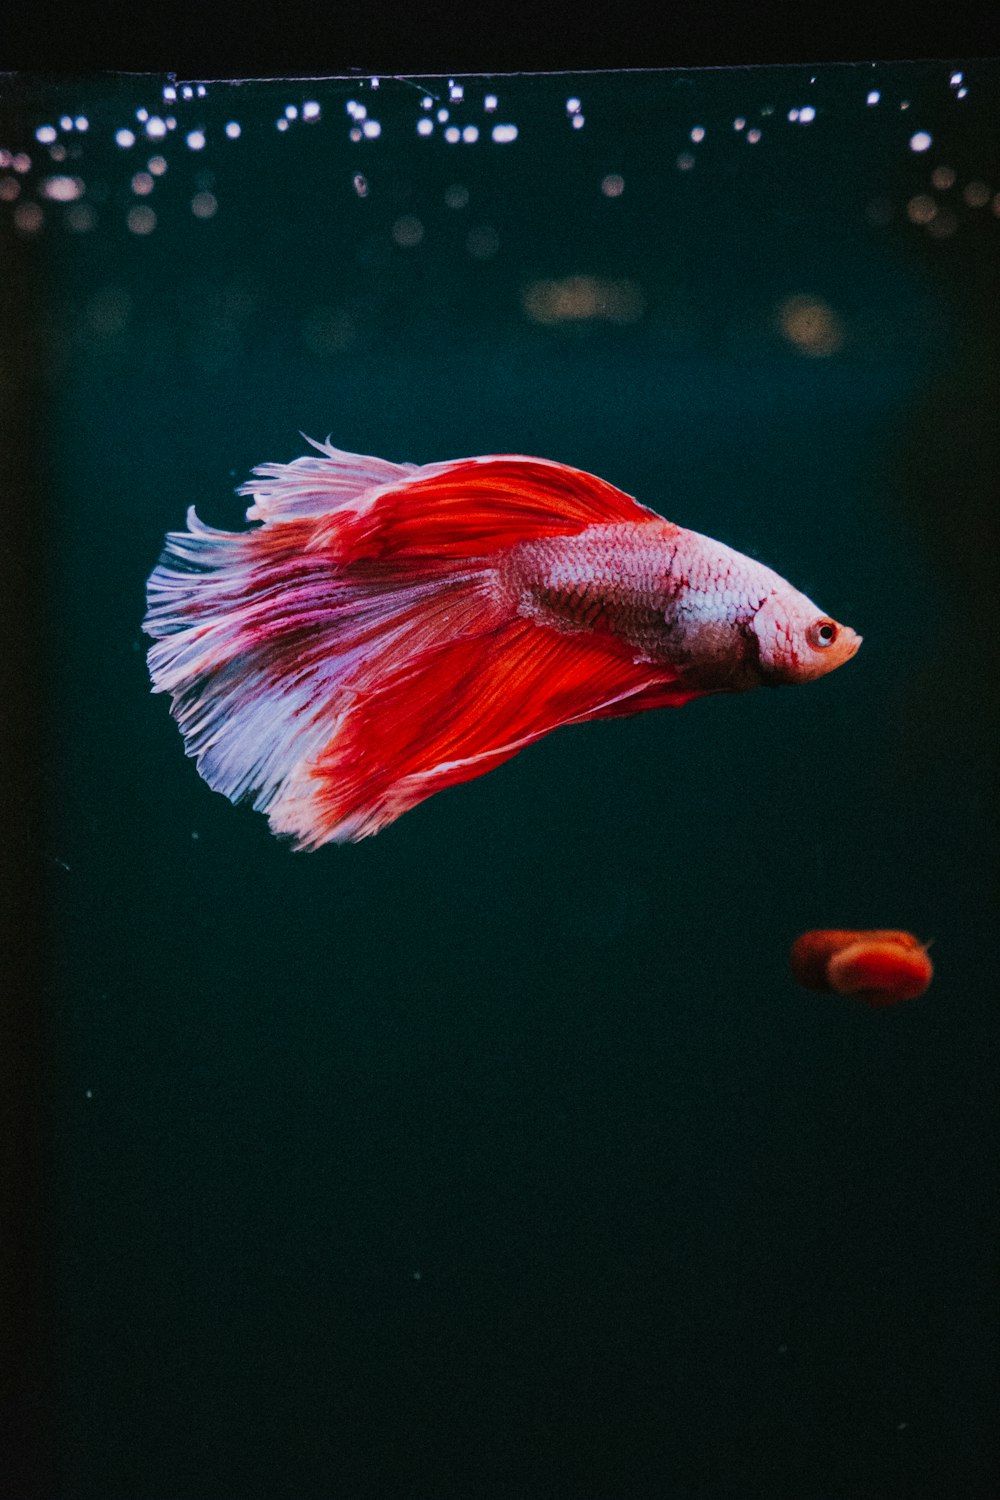 red fish wallpaper photo – Free Fish Image on Unsplash